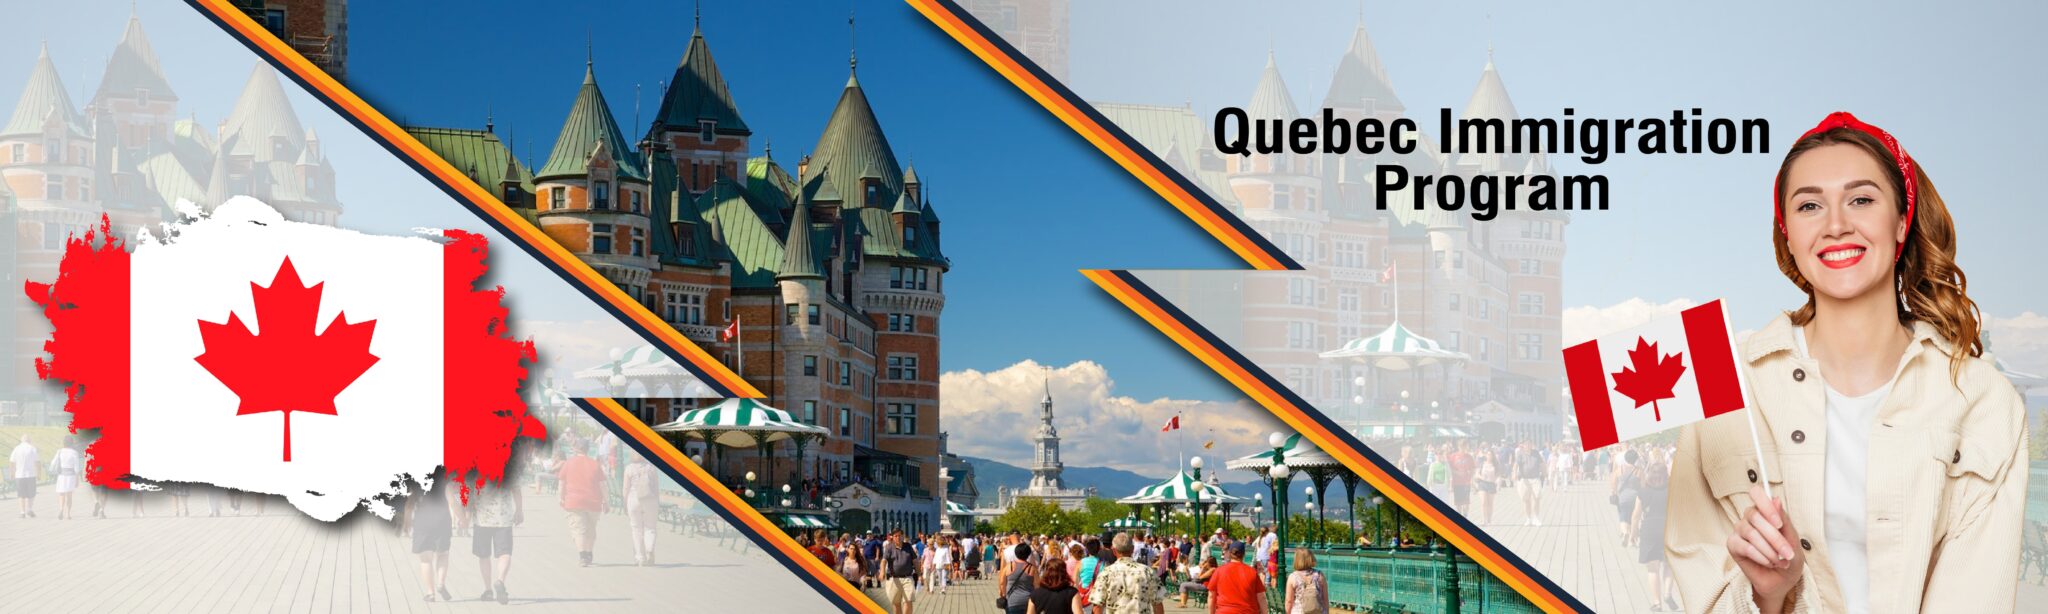 Quebec Immigration Program Uniexperts Group